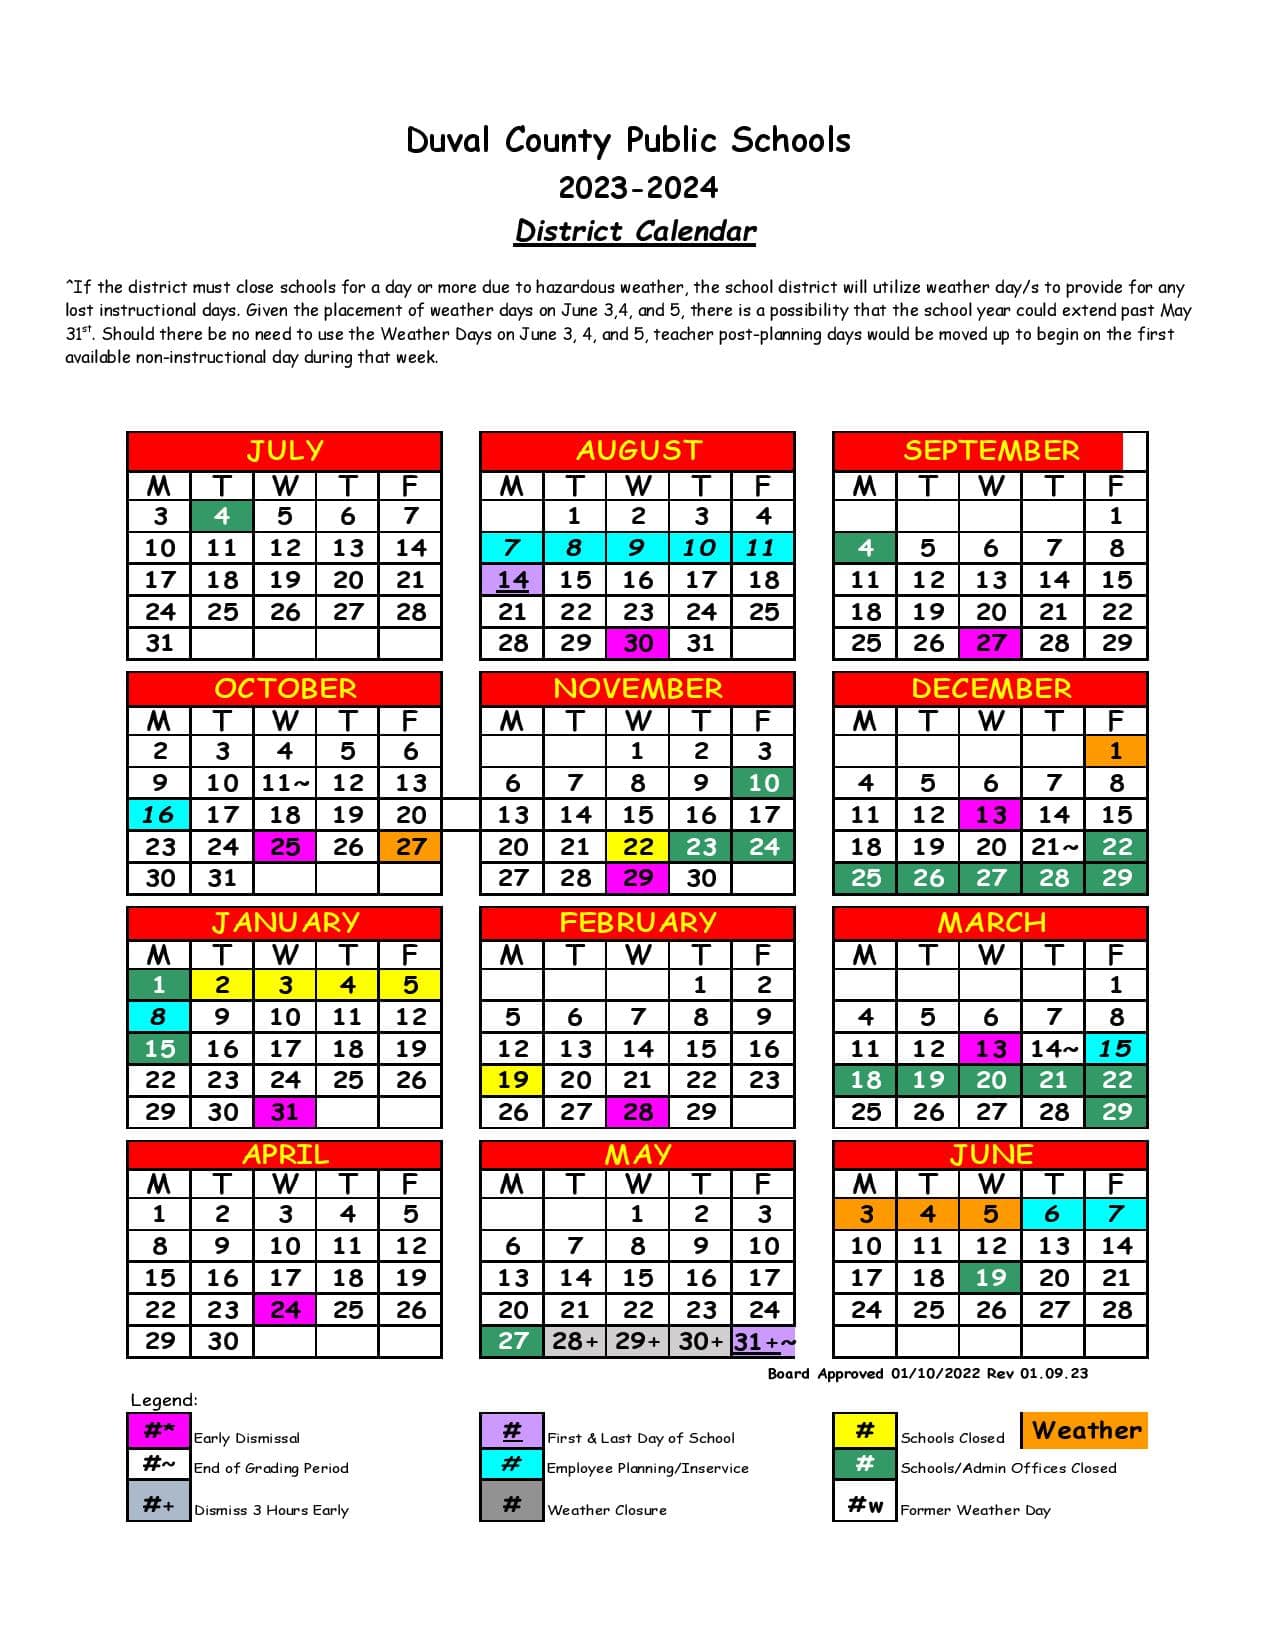 Duval County Schools Calendar 2023 2024 Holiday Breaks